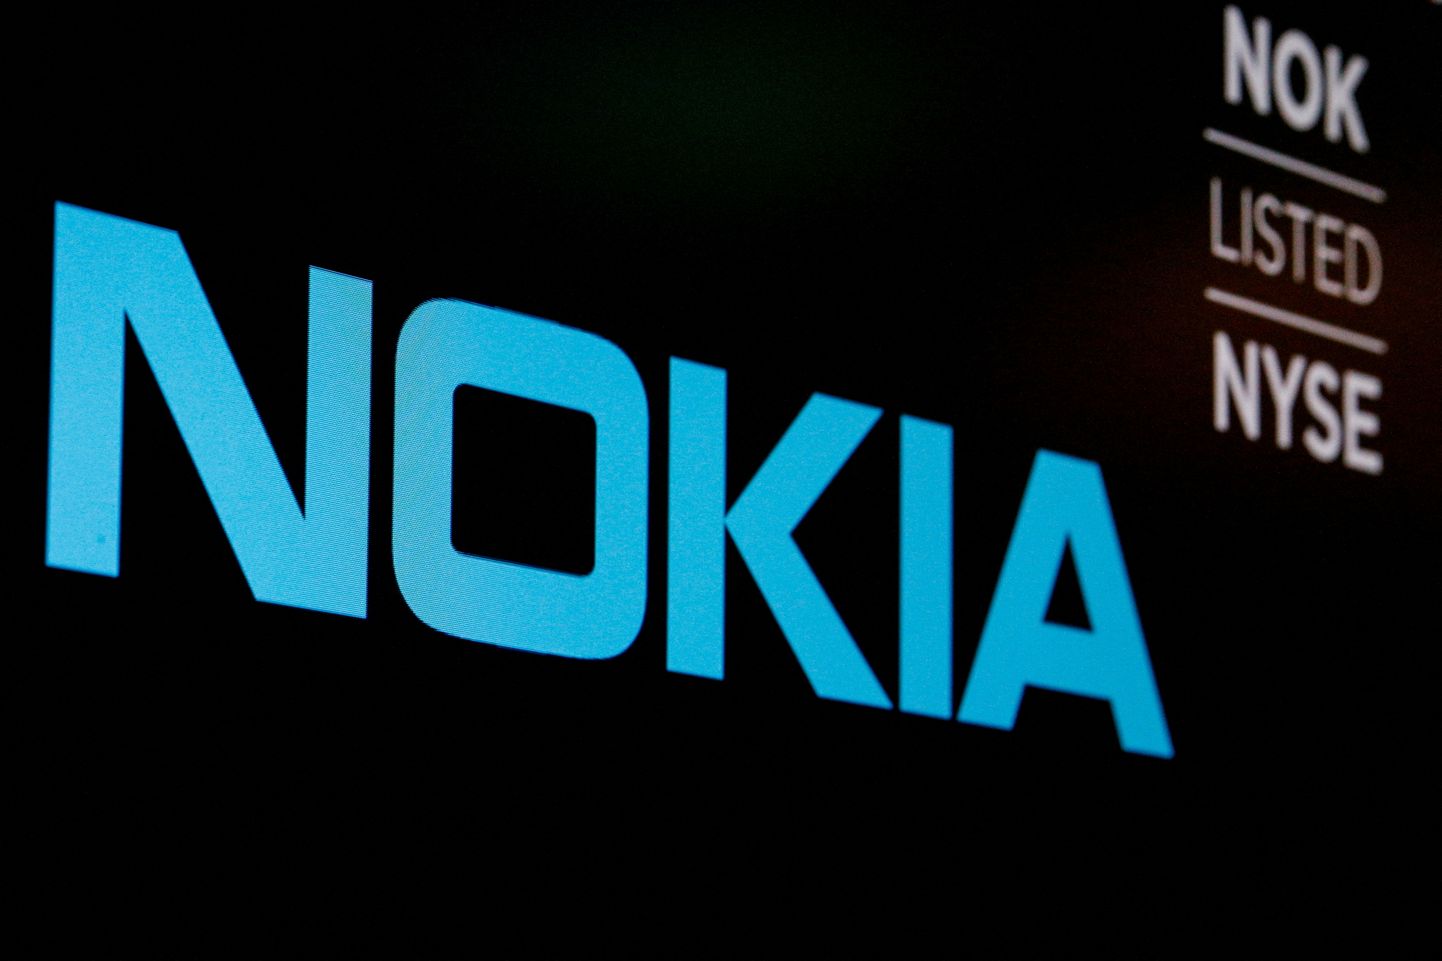 Nokia logo New Yorgi börsil.